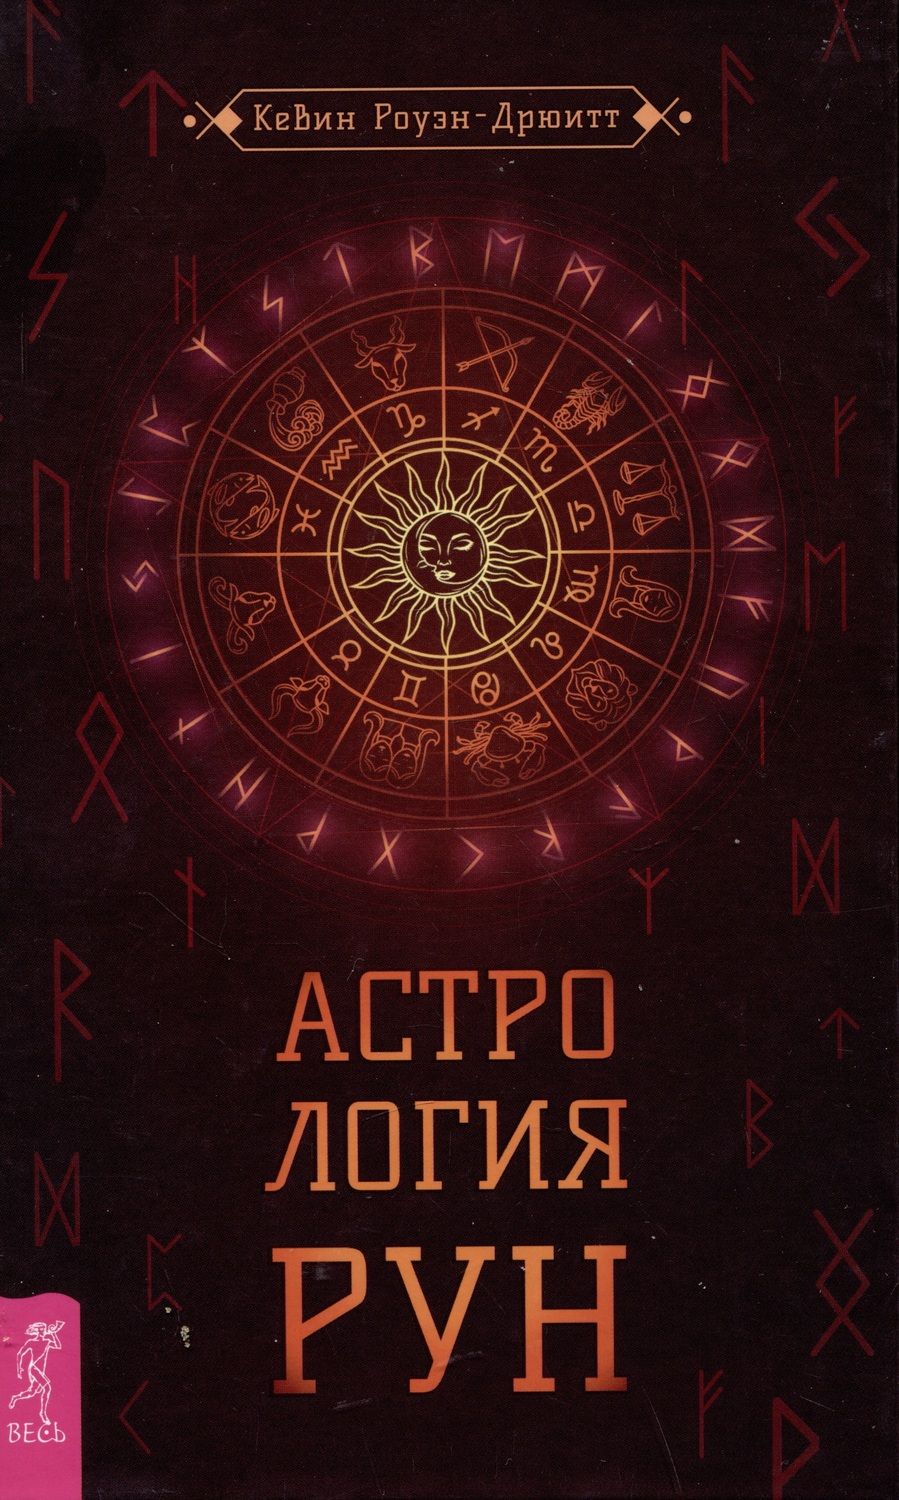 Обложка книги "Роуэн-Дрюитт: Астрология рун"